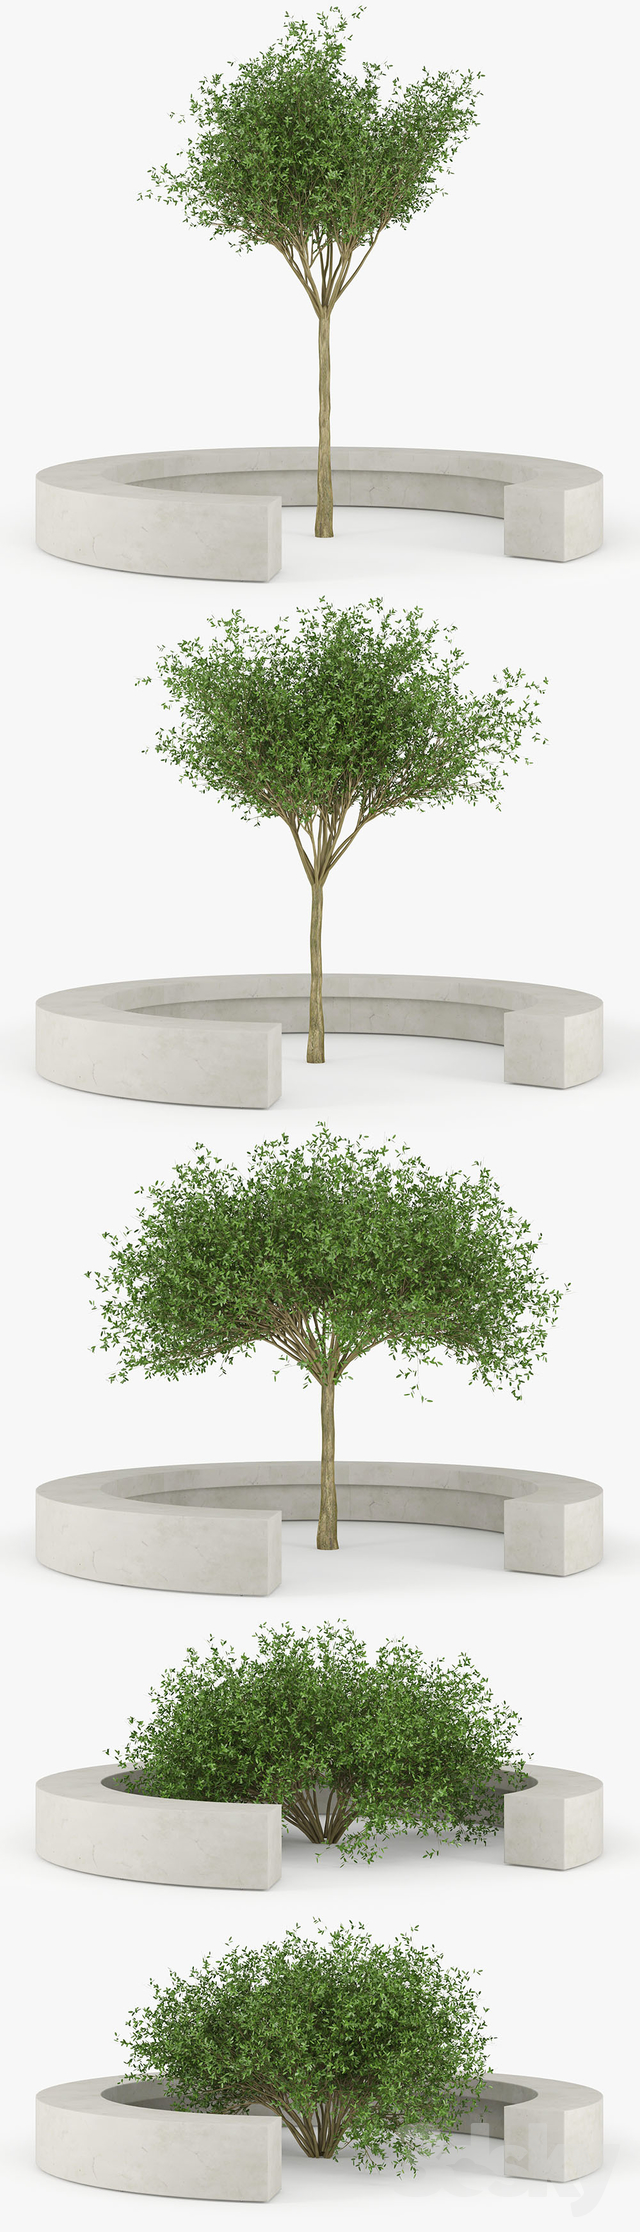 Plant - COMB BY VORA ARQUITECTURA Tree Bench